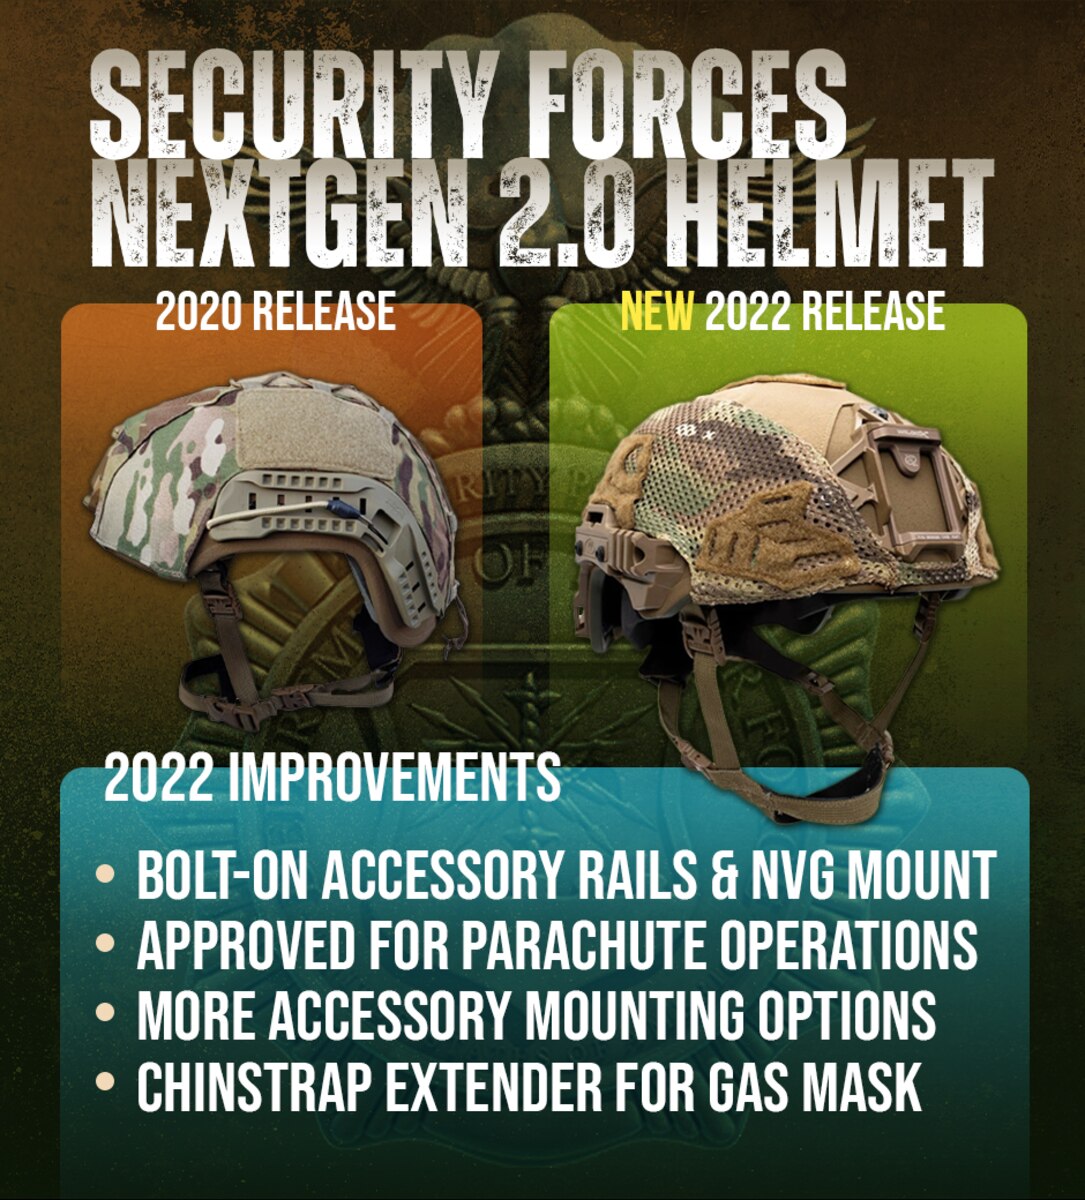 NextGen 2.0 helmets on the way to Defenders across DAF >Edwards Air Force Base >AFMC News